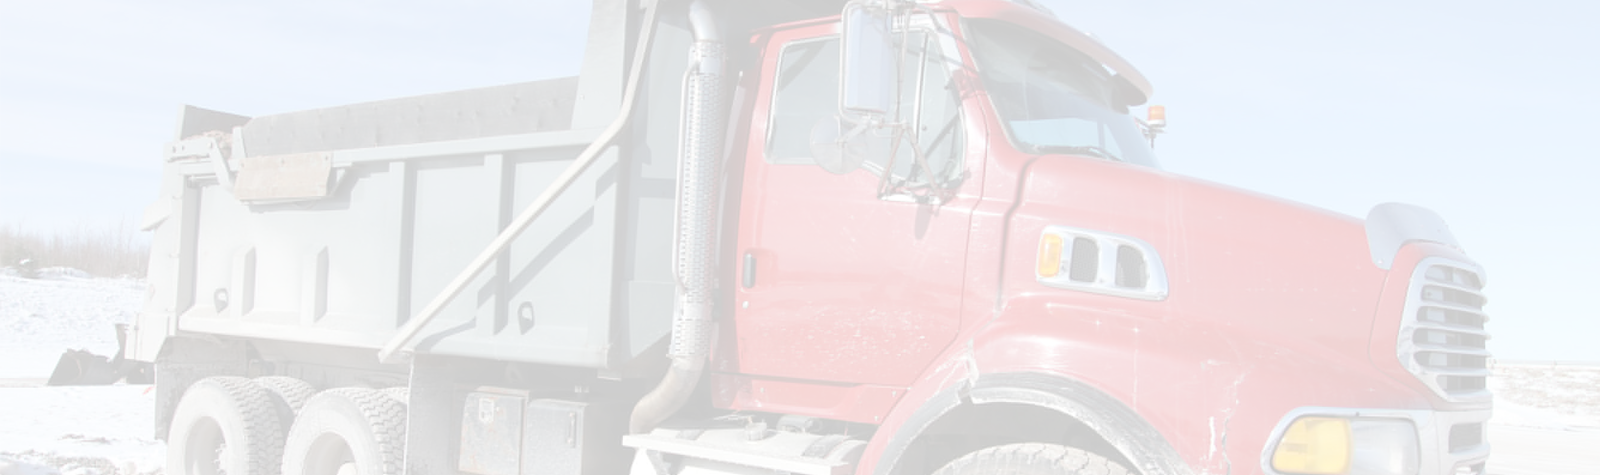 Dump Truck Financing | Dump Truck Leasing Company